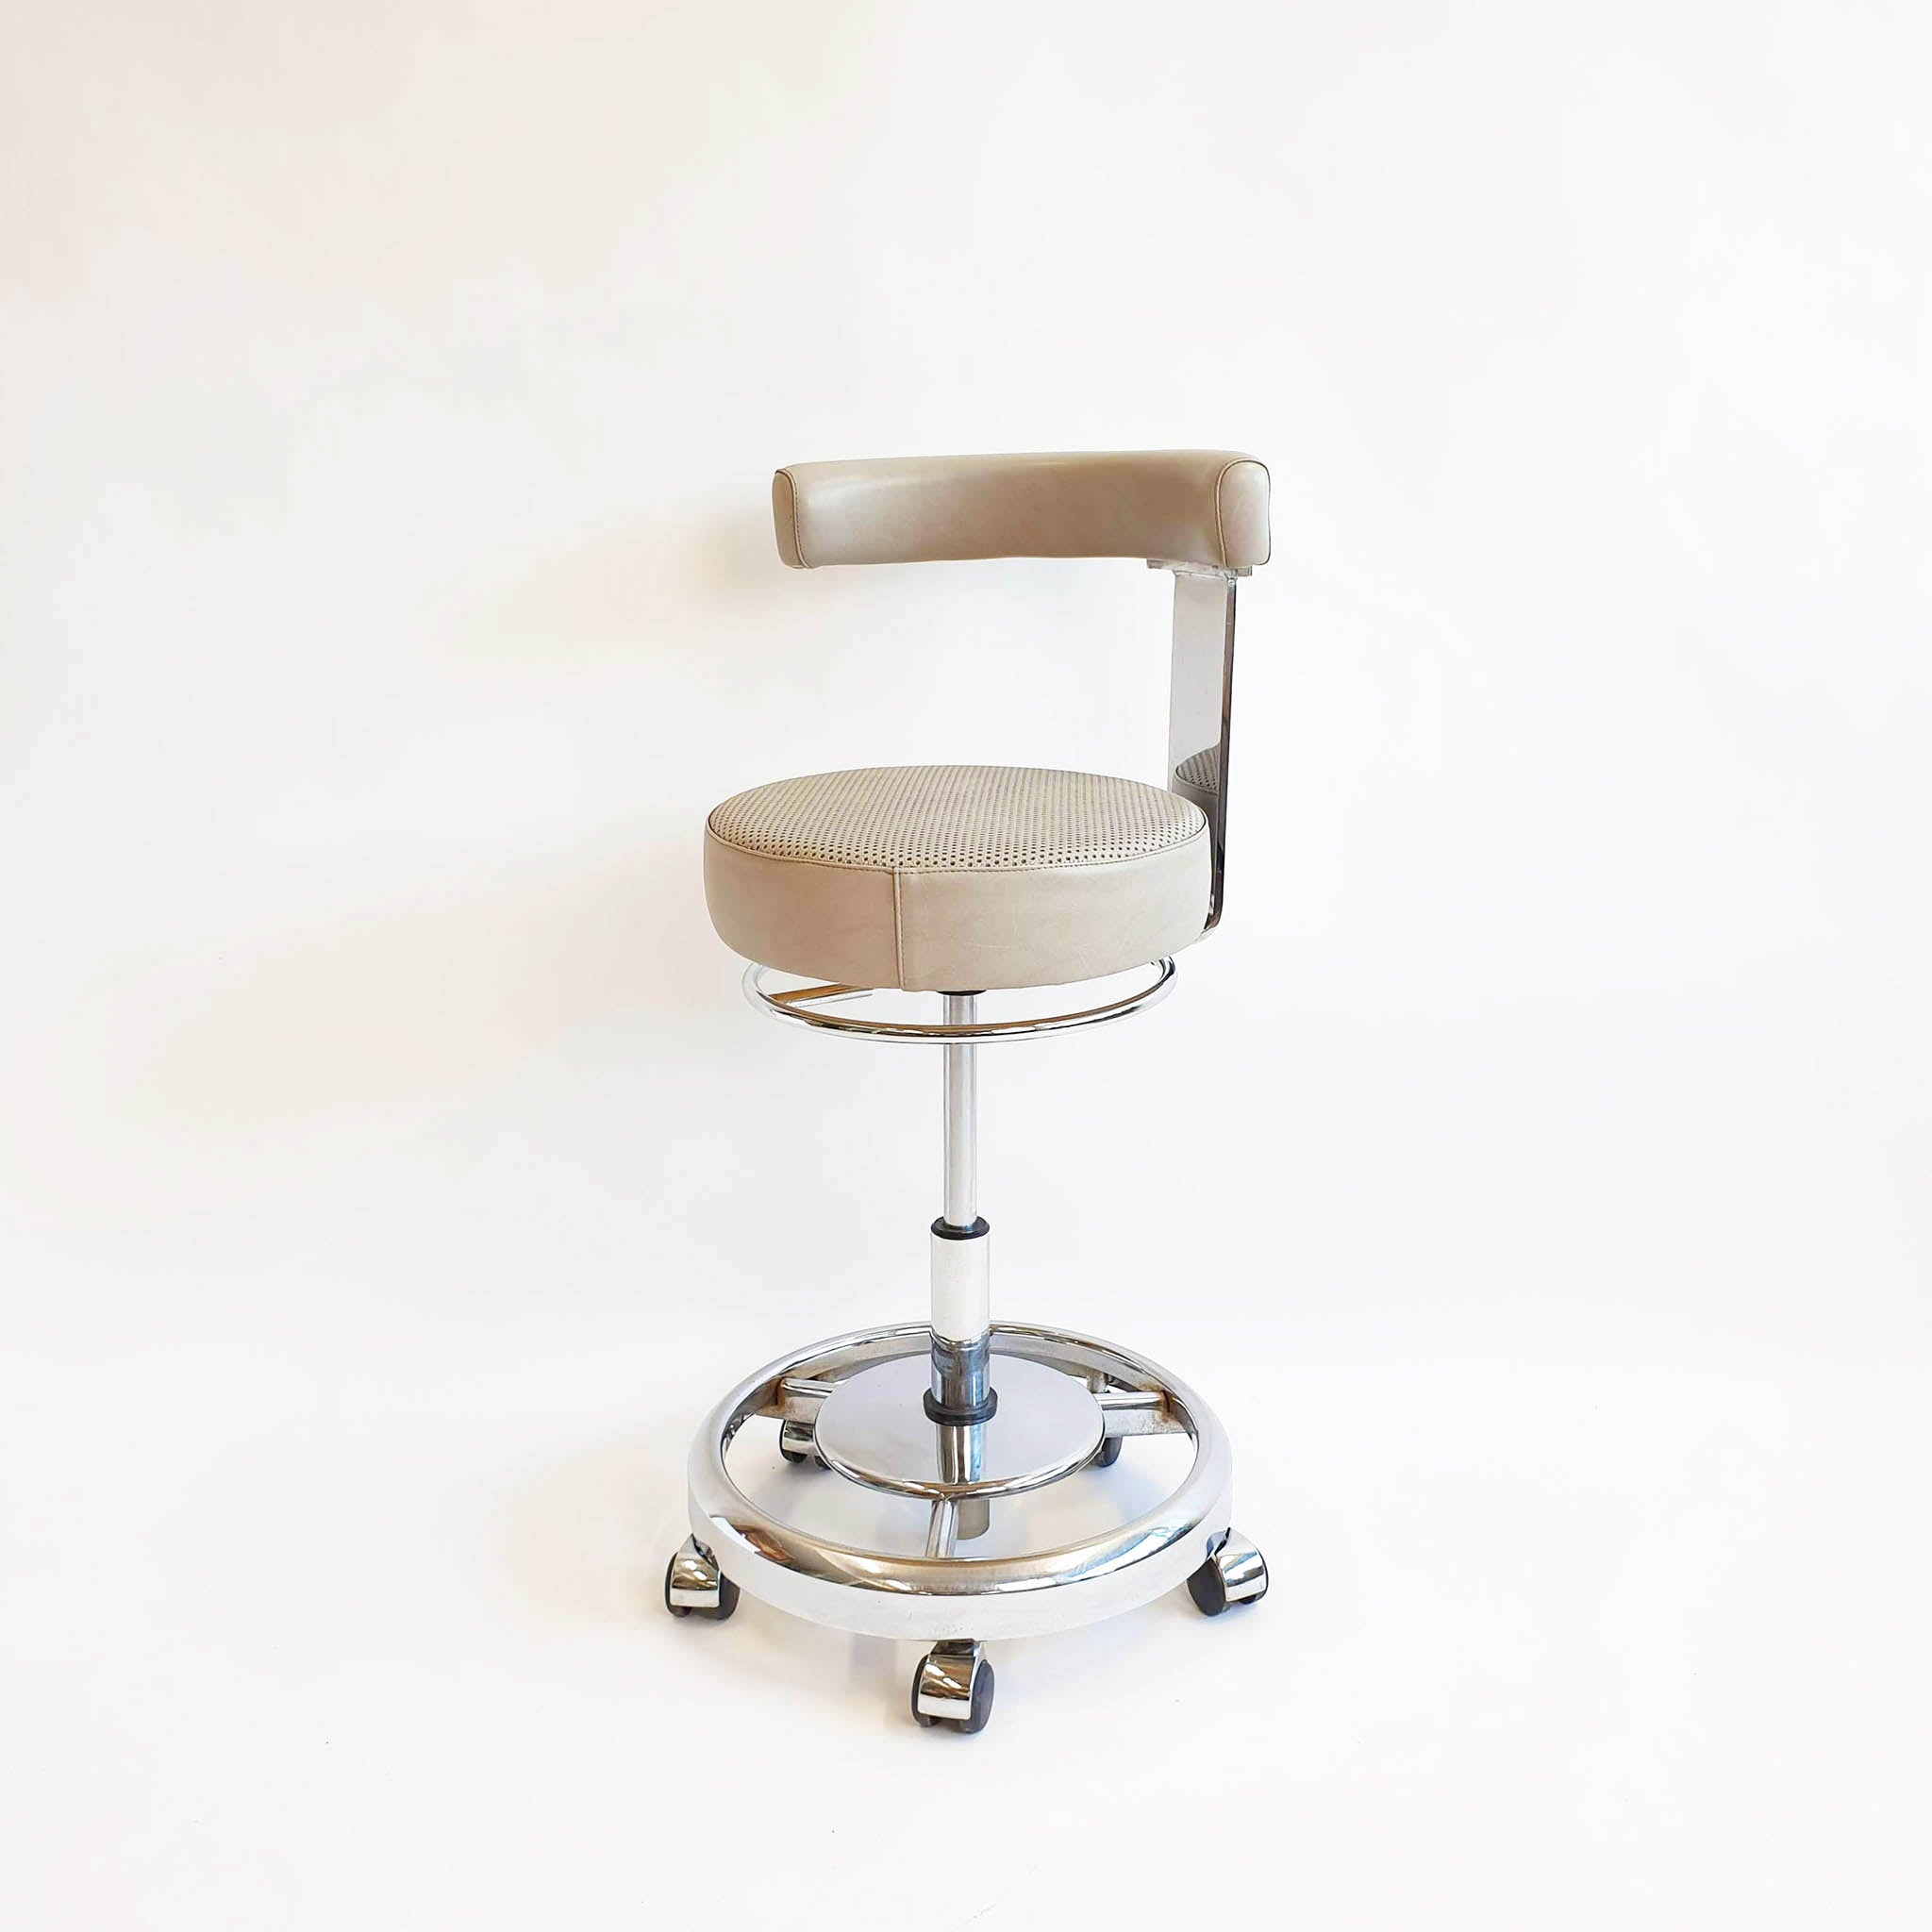 1980s Italian swivel chair by Euronda